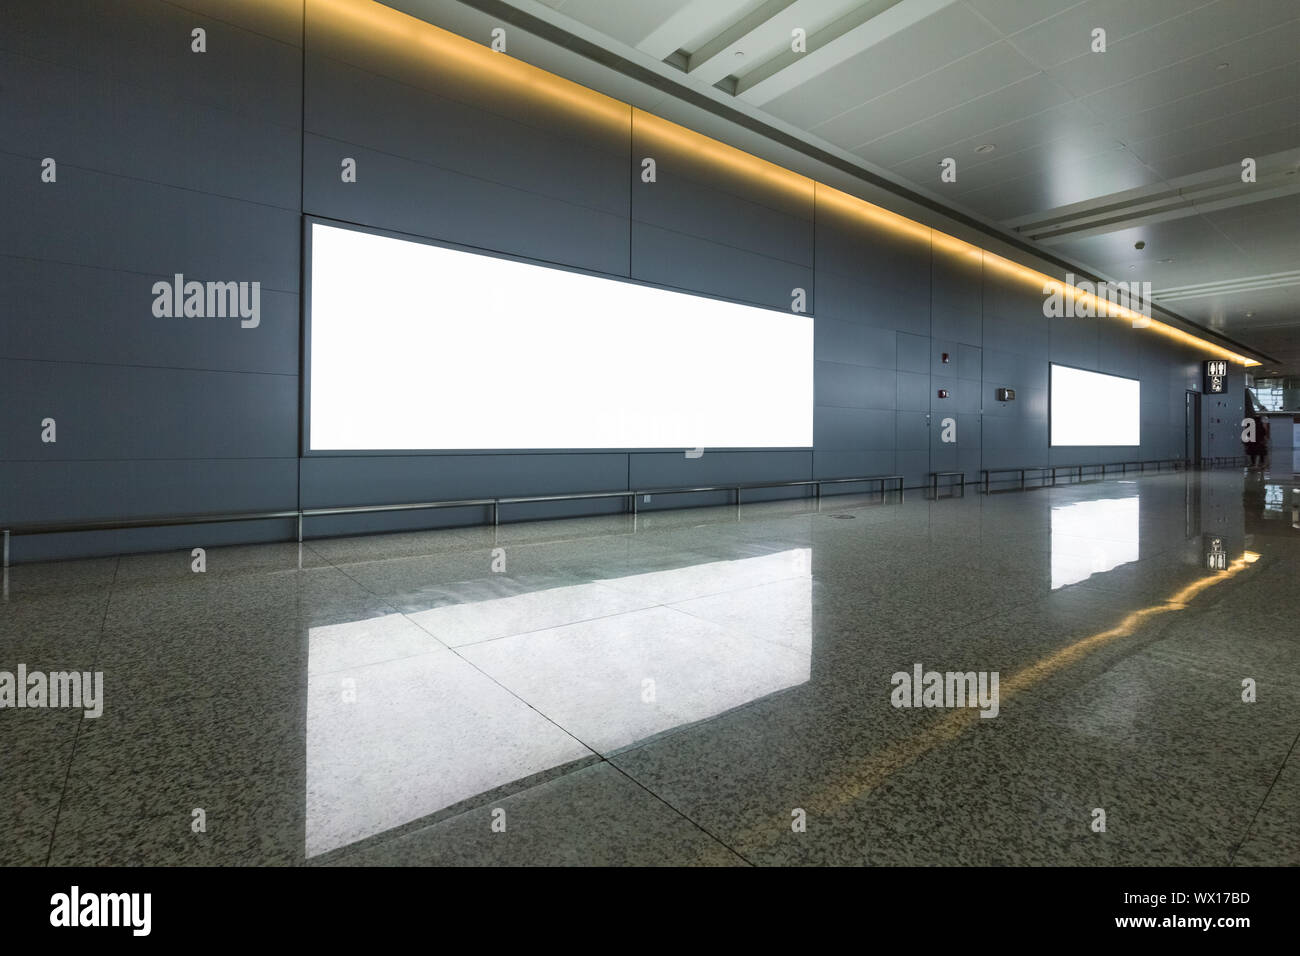 advertising light box at airport passage Stock Photo